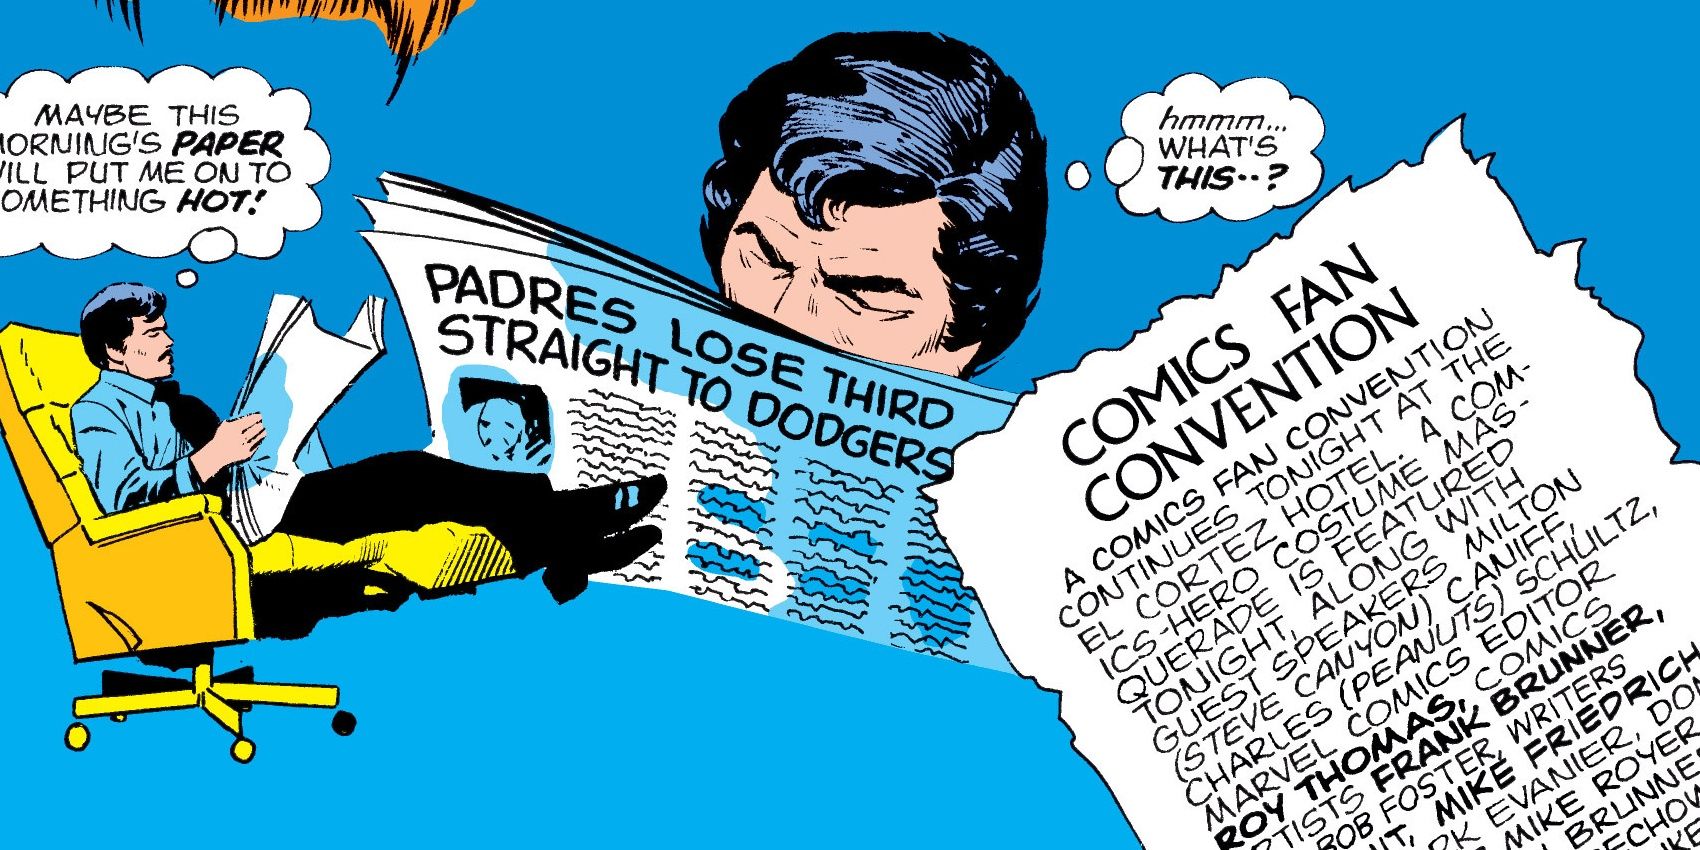 Tony Stark reading the newspaper